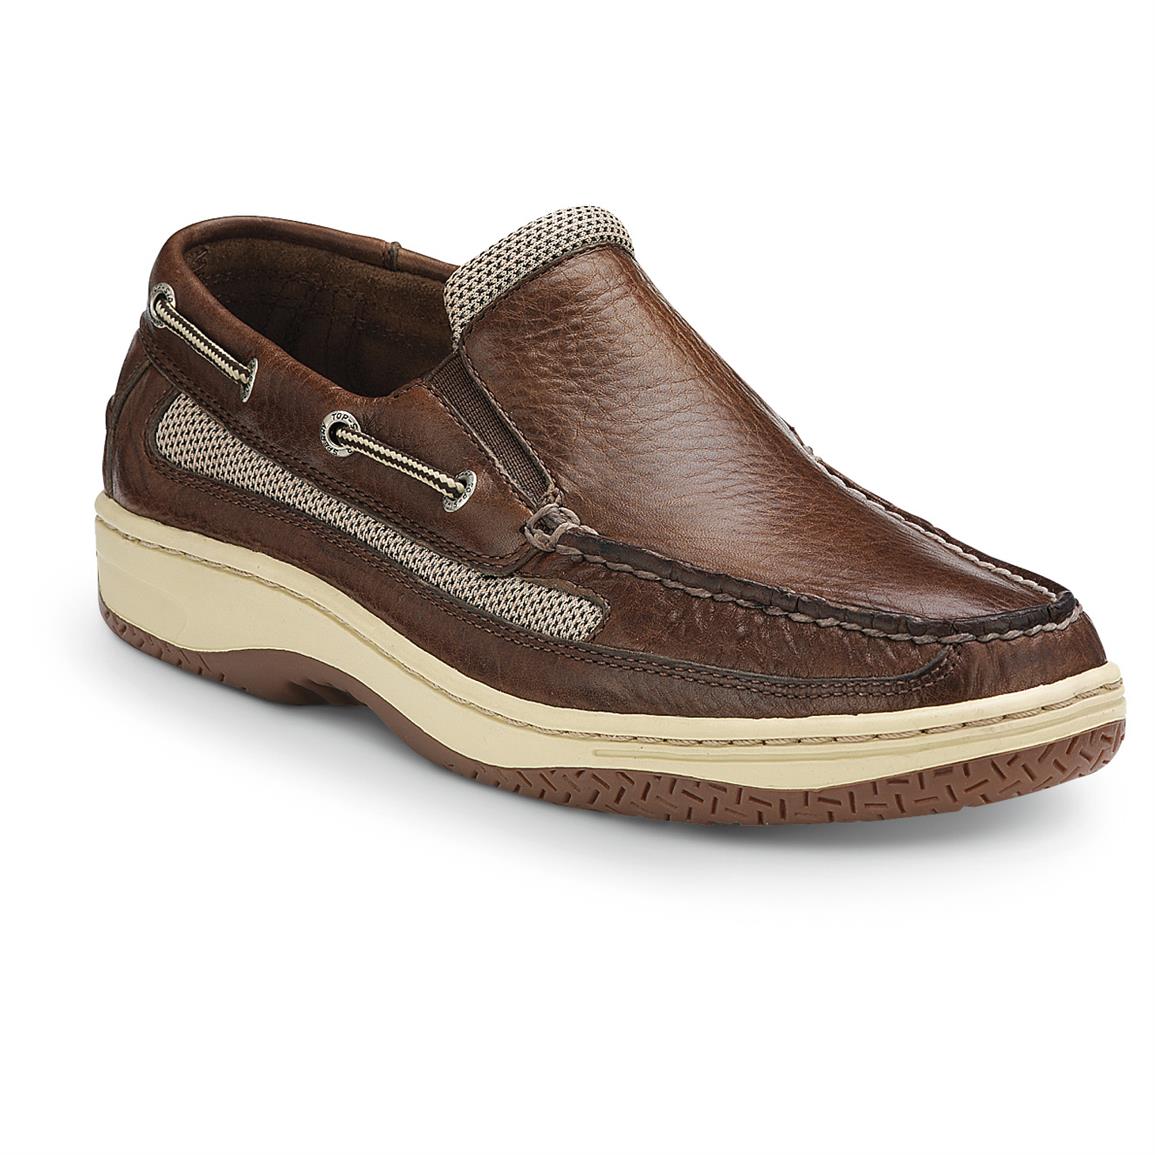 Sperry Top-Sider Men's Billfish Slip-On Boat Shoes ...